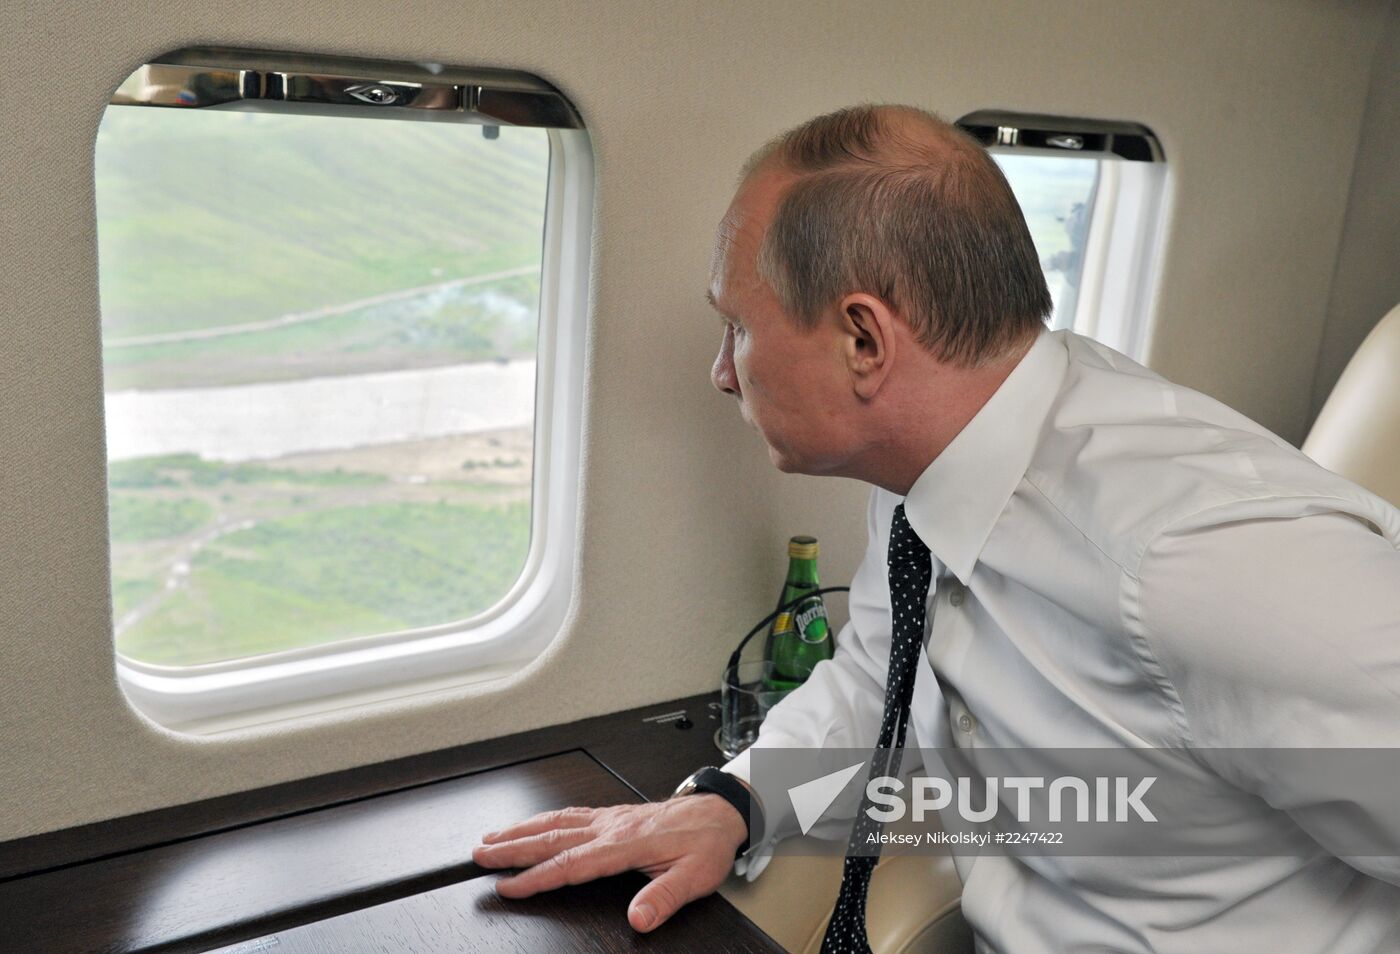 Vladimir Putin watches military exercise